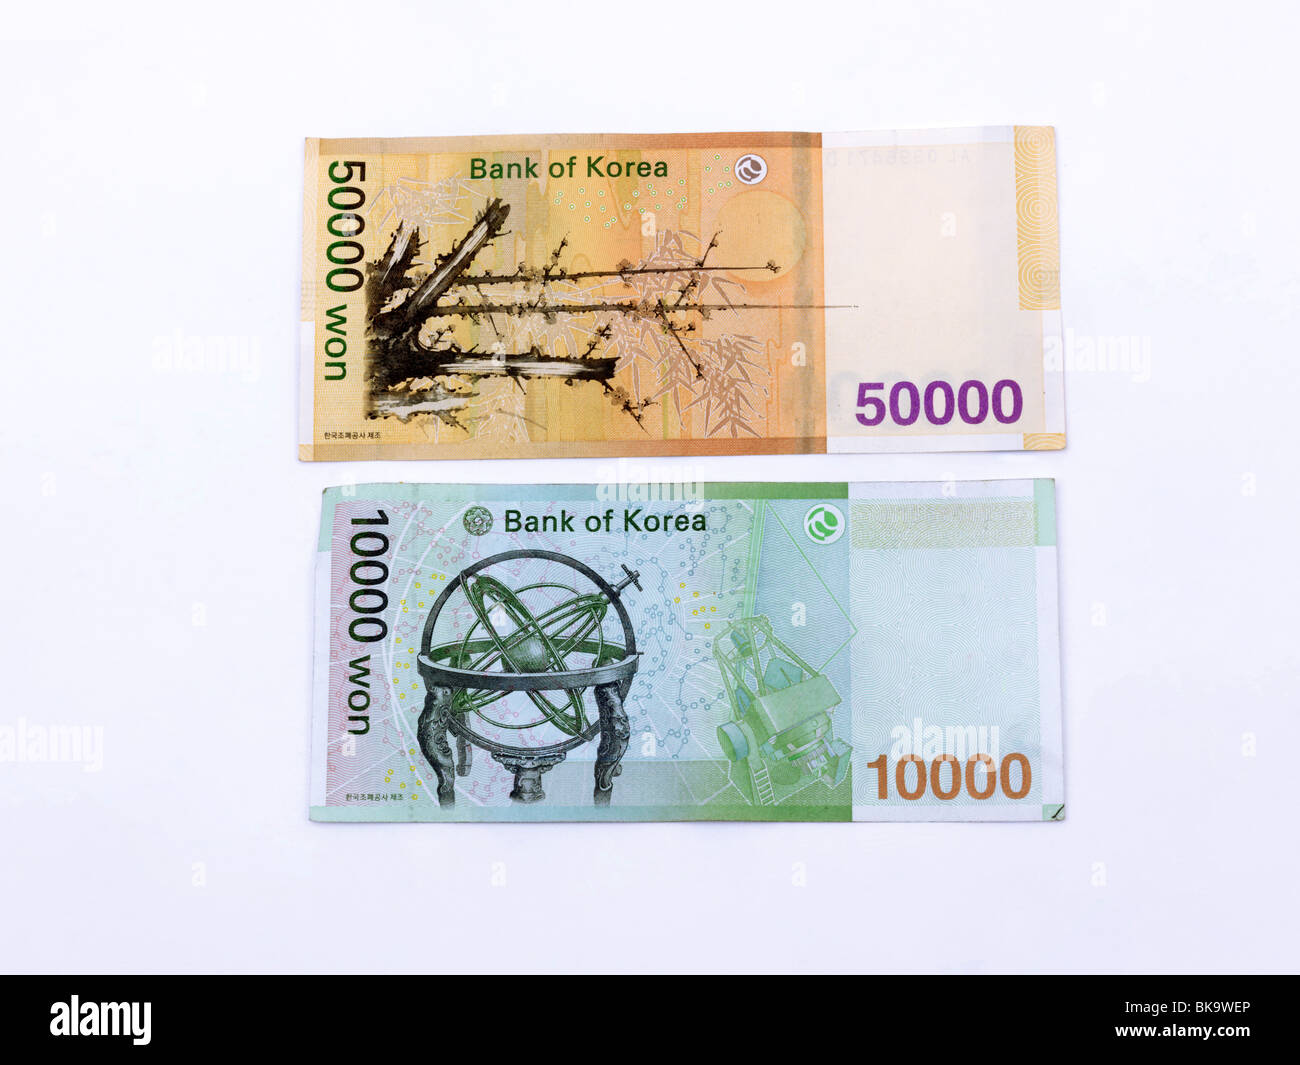 South Korea Banknotes 50000 Won And 10000 Won Stock Photo